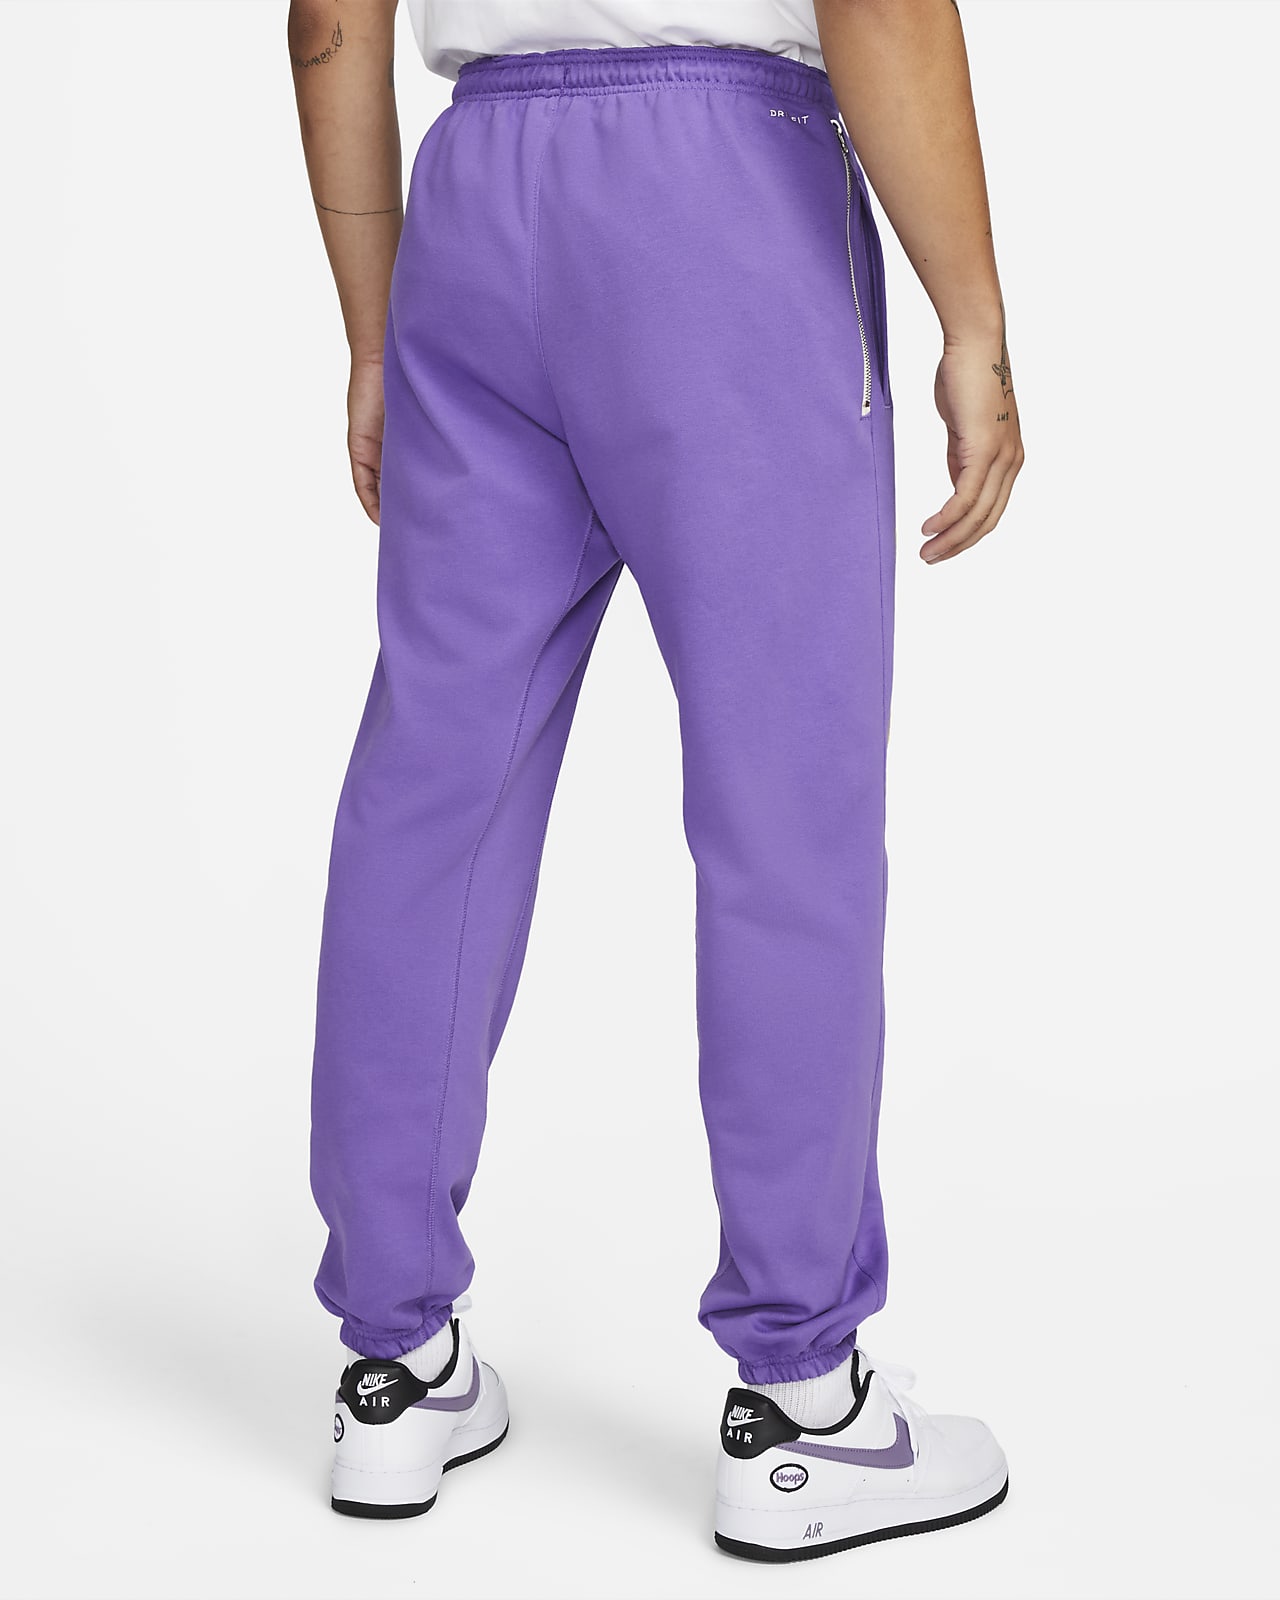 Nike Dri-Fit Standard Issue Men's Basketball Pants